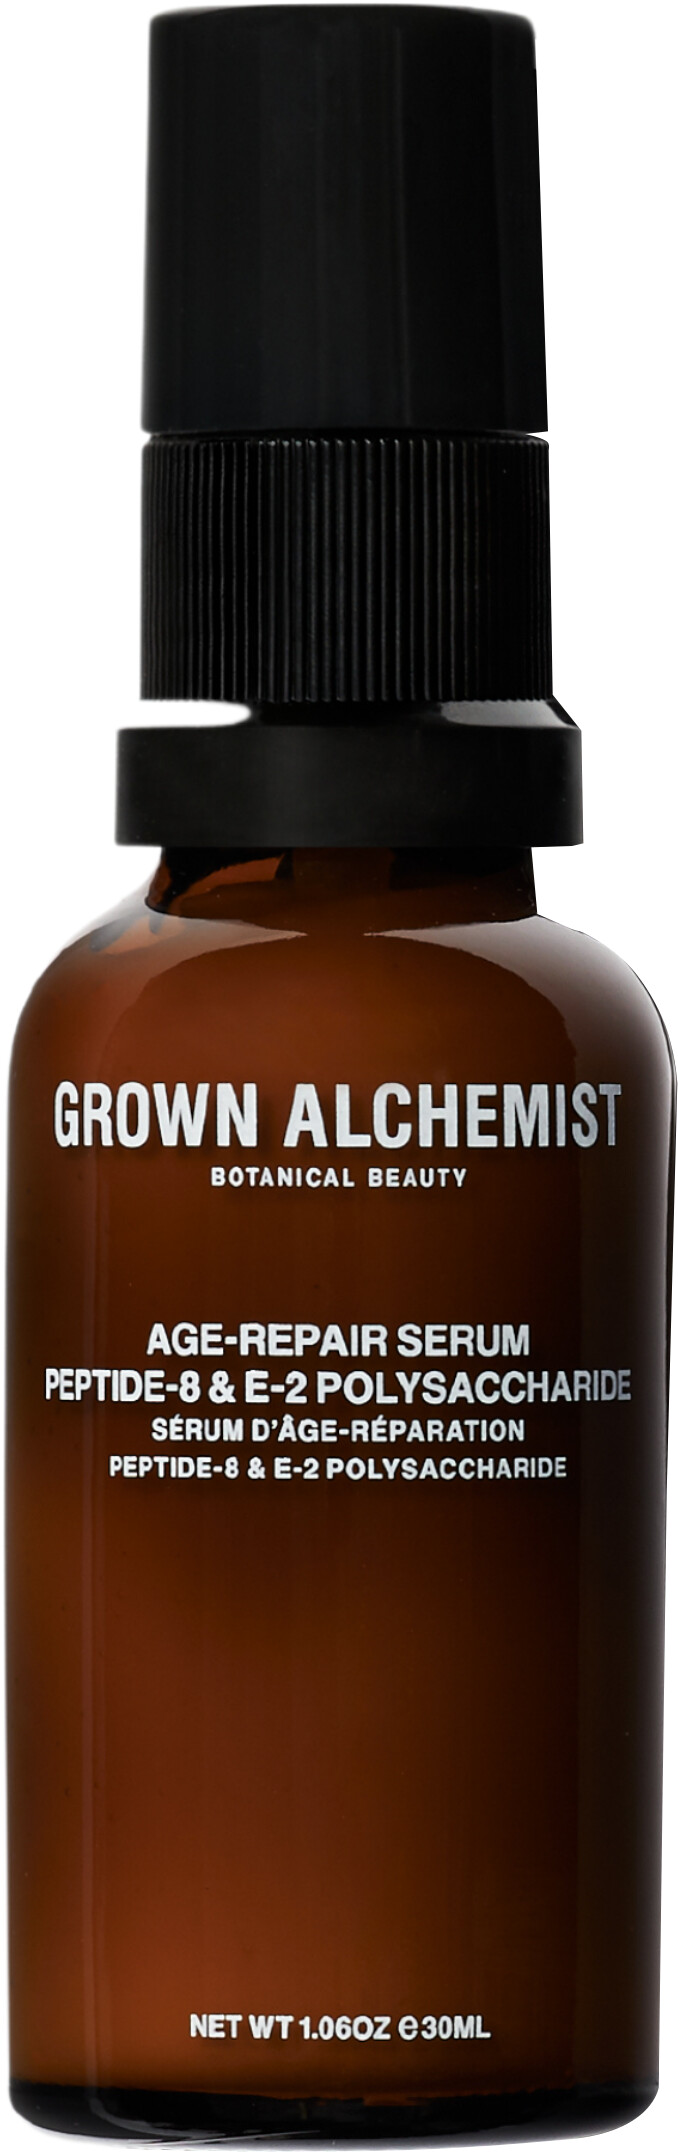 Grown Alchemist Age-Repair Serum Peptide - 8 & E-2 Polysaccharide 30ml